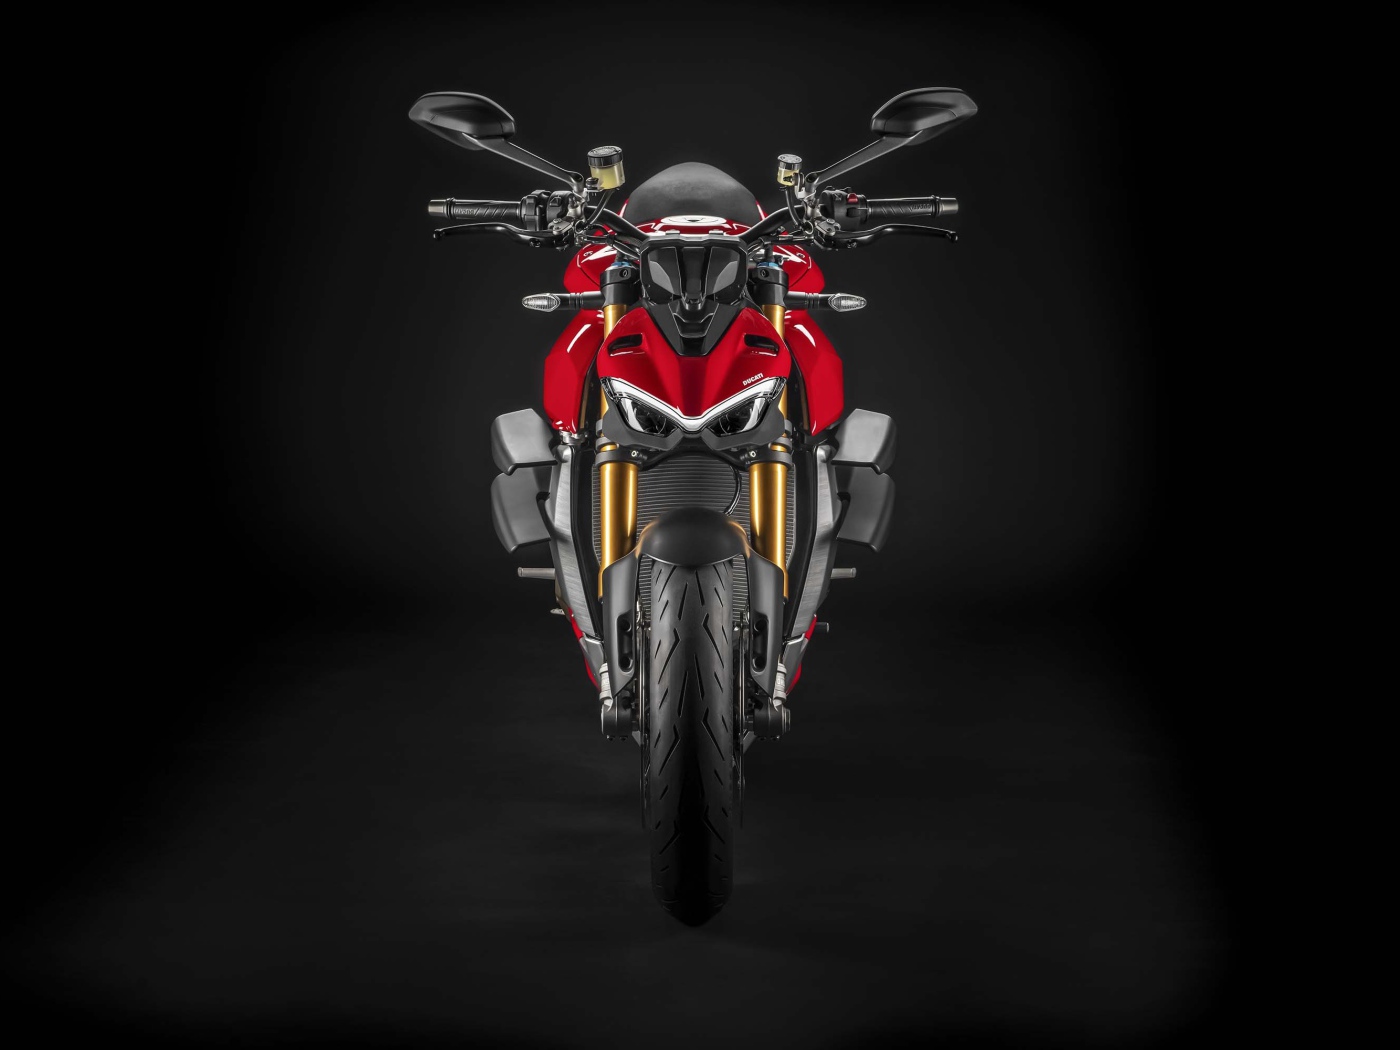 Мотоцикл Ducati Streetfighter V4, 2020 года вид спереди